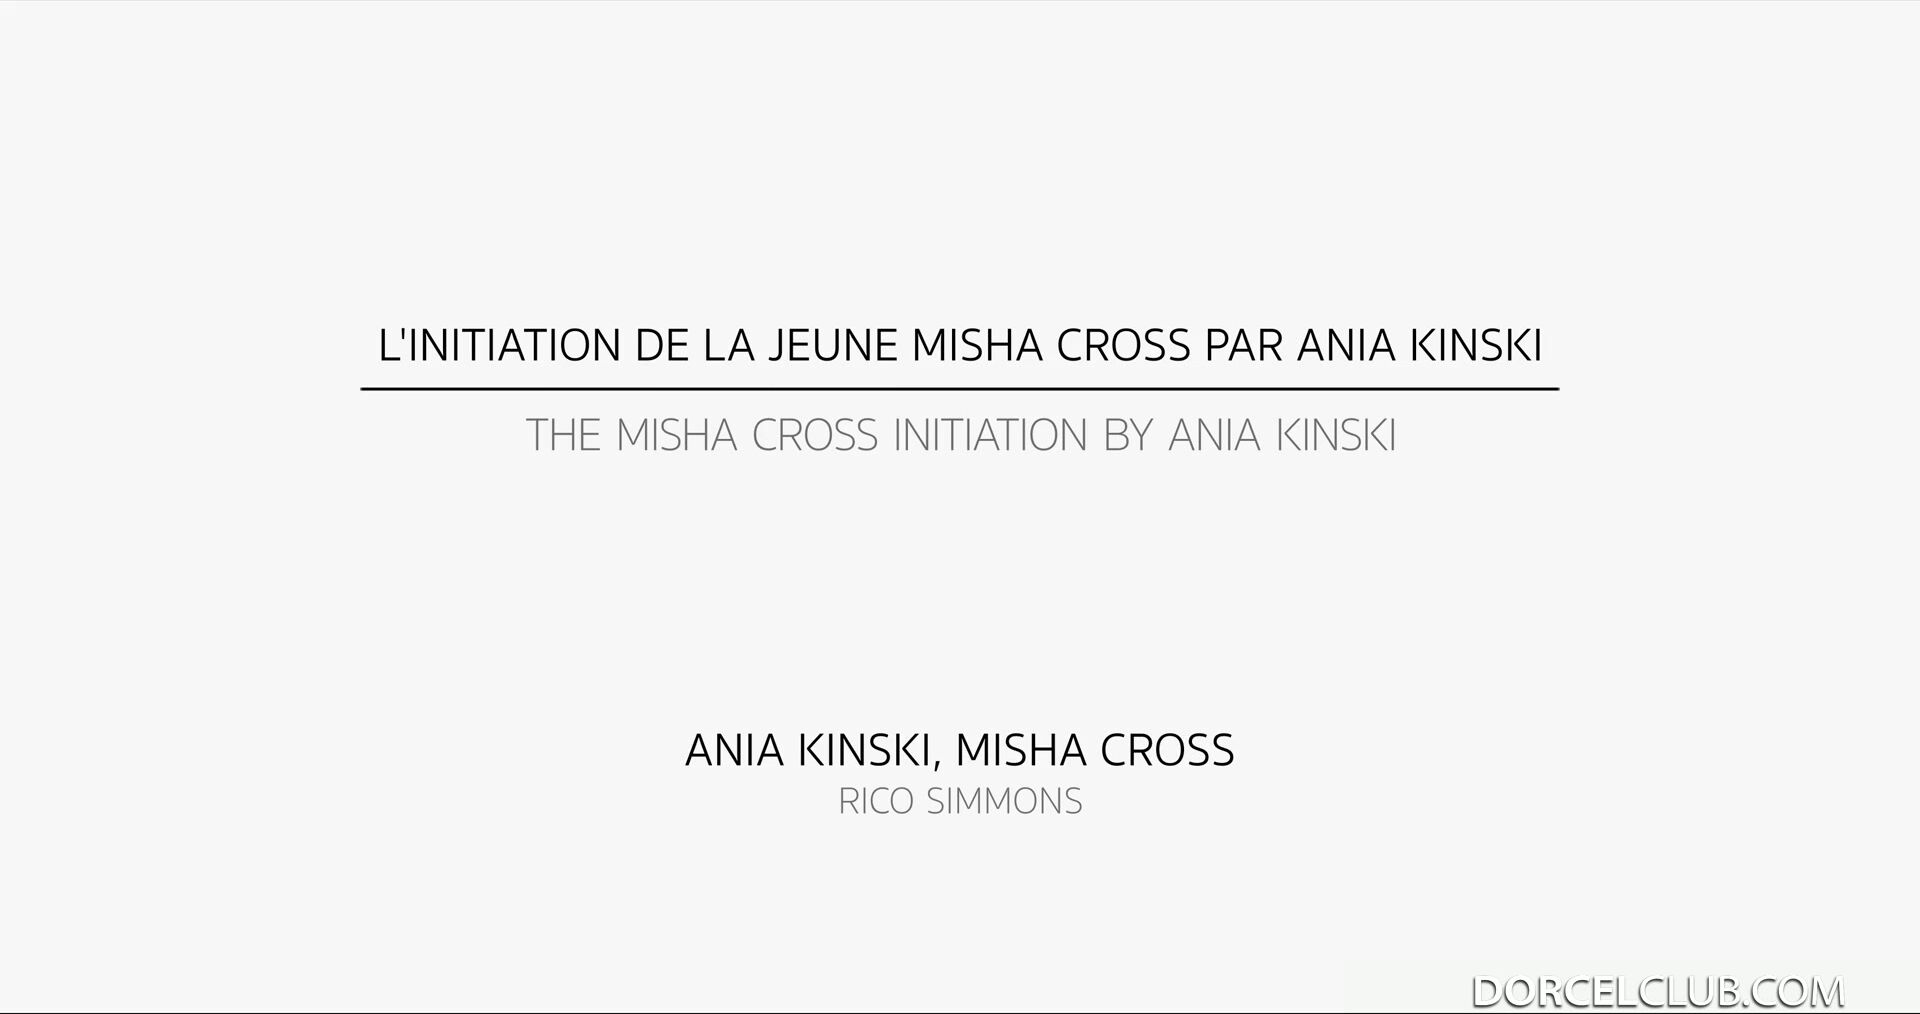 dorcelclub.com marc dorcel the misha cross initiation by ania kinski 25913 1080p full mp4